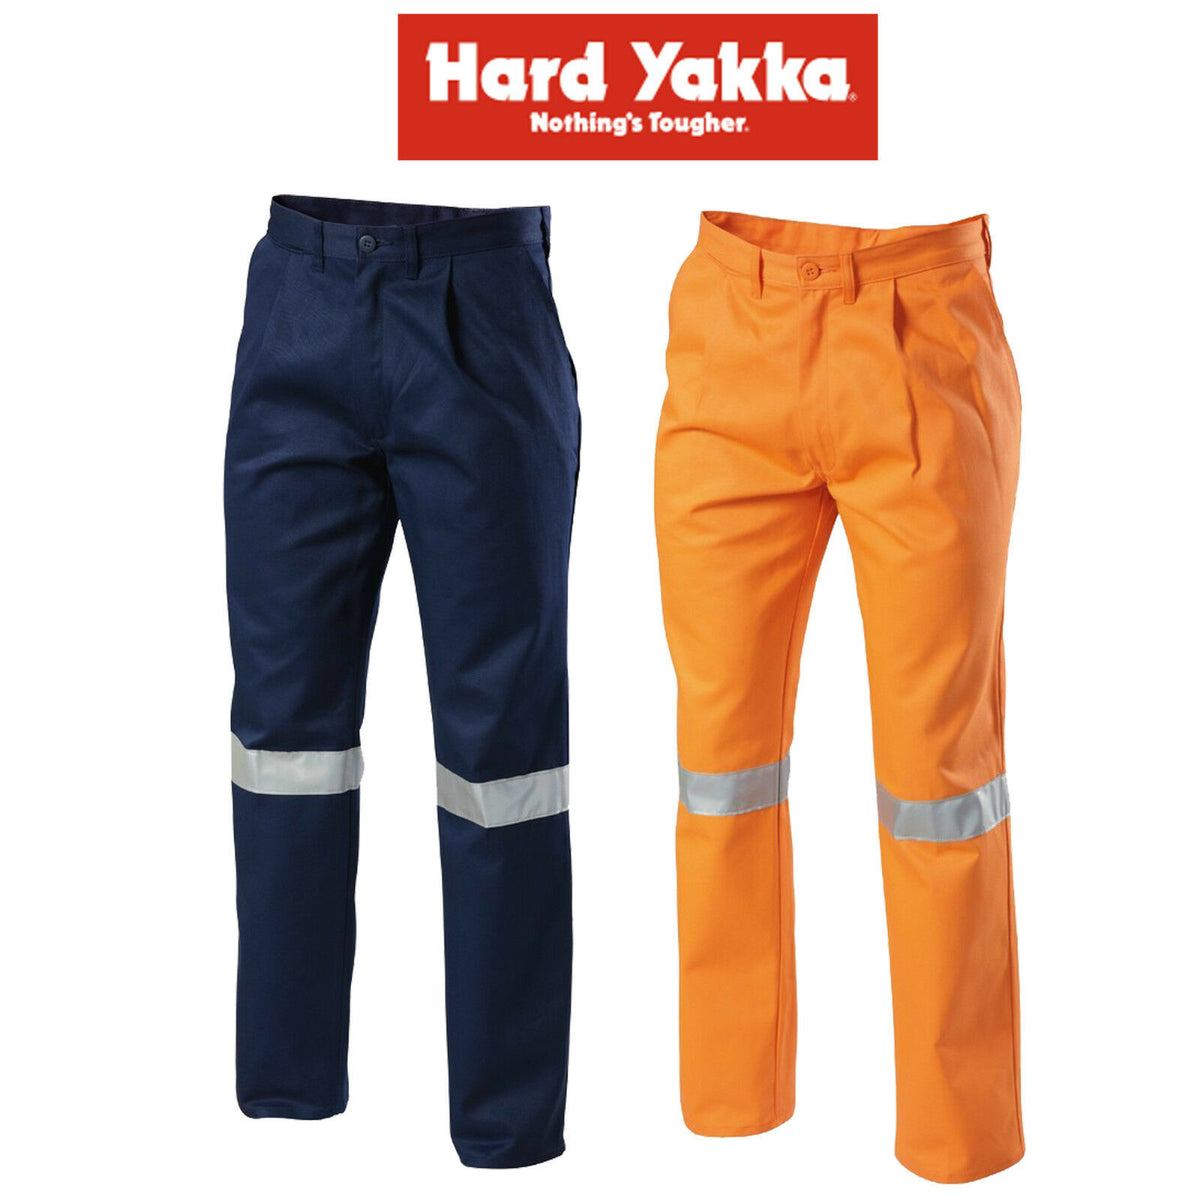 Mens Hard Yakka Cotton Drill Pants Reflective Tape Workwear Tough Y02615